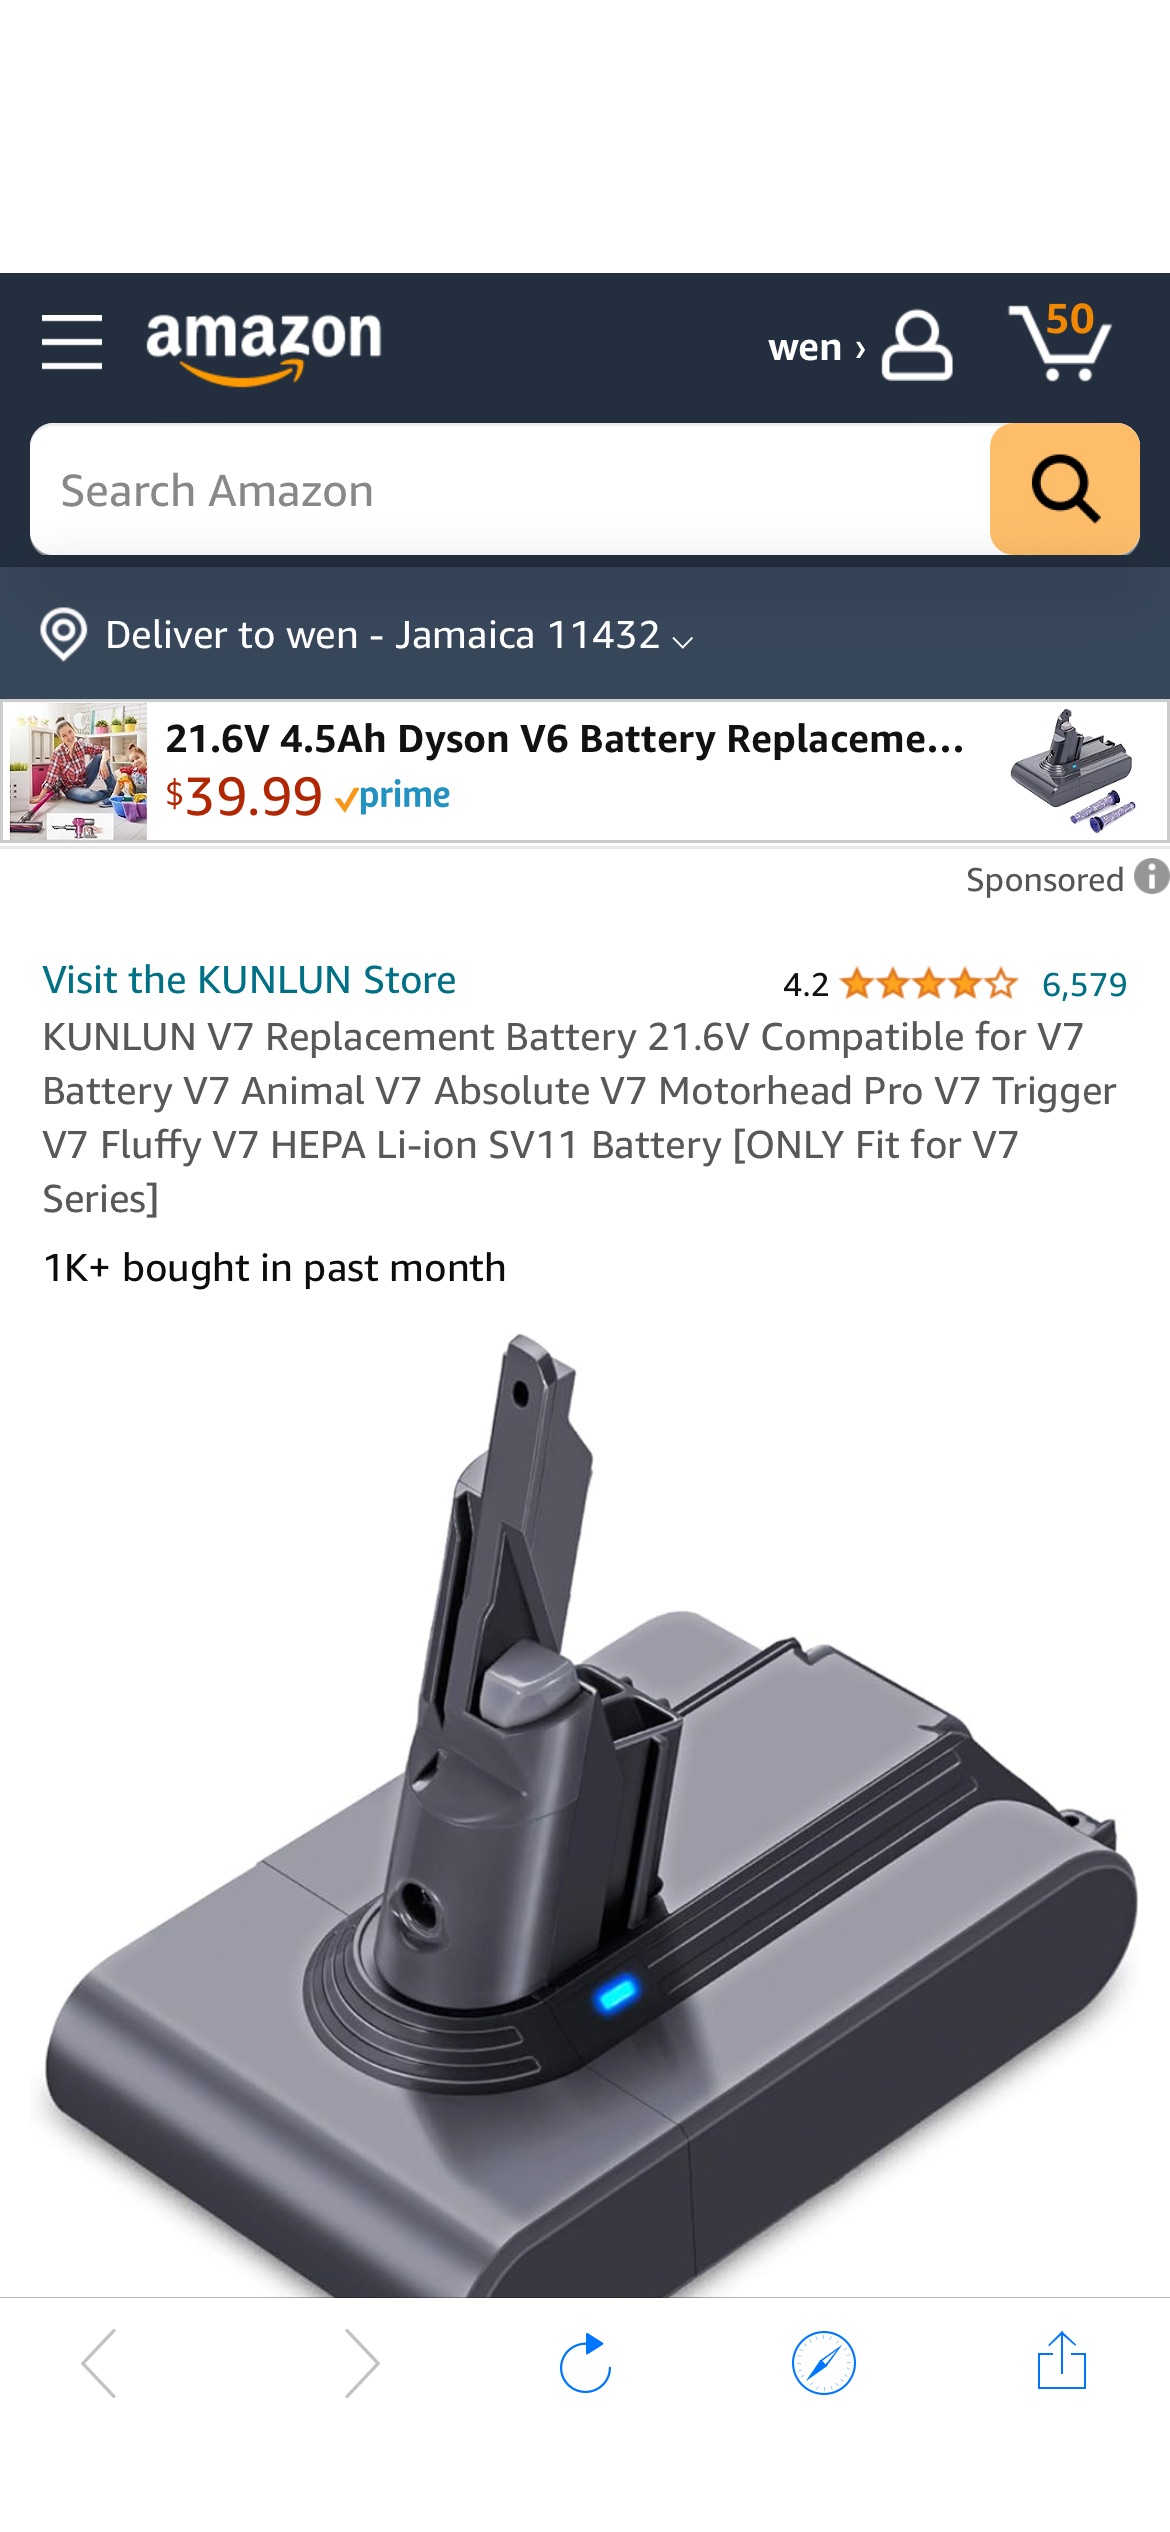 Amazon.com: KUNLUN V7 Replacement Battery 21.6V Compatible for V7 Battery V7 Animal V7 Absolute V7 Motorhead Pro V7 Trigger V7 Fluffy V7 HEPA Li-ion SV11 Battery [ONLY Fit for V7 Series] : Home & Kitc